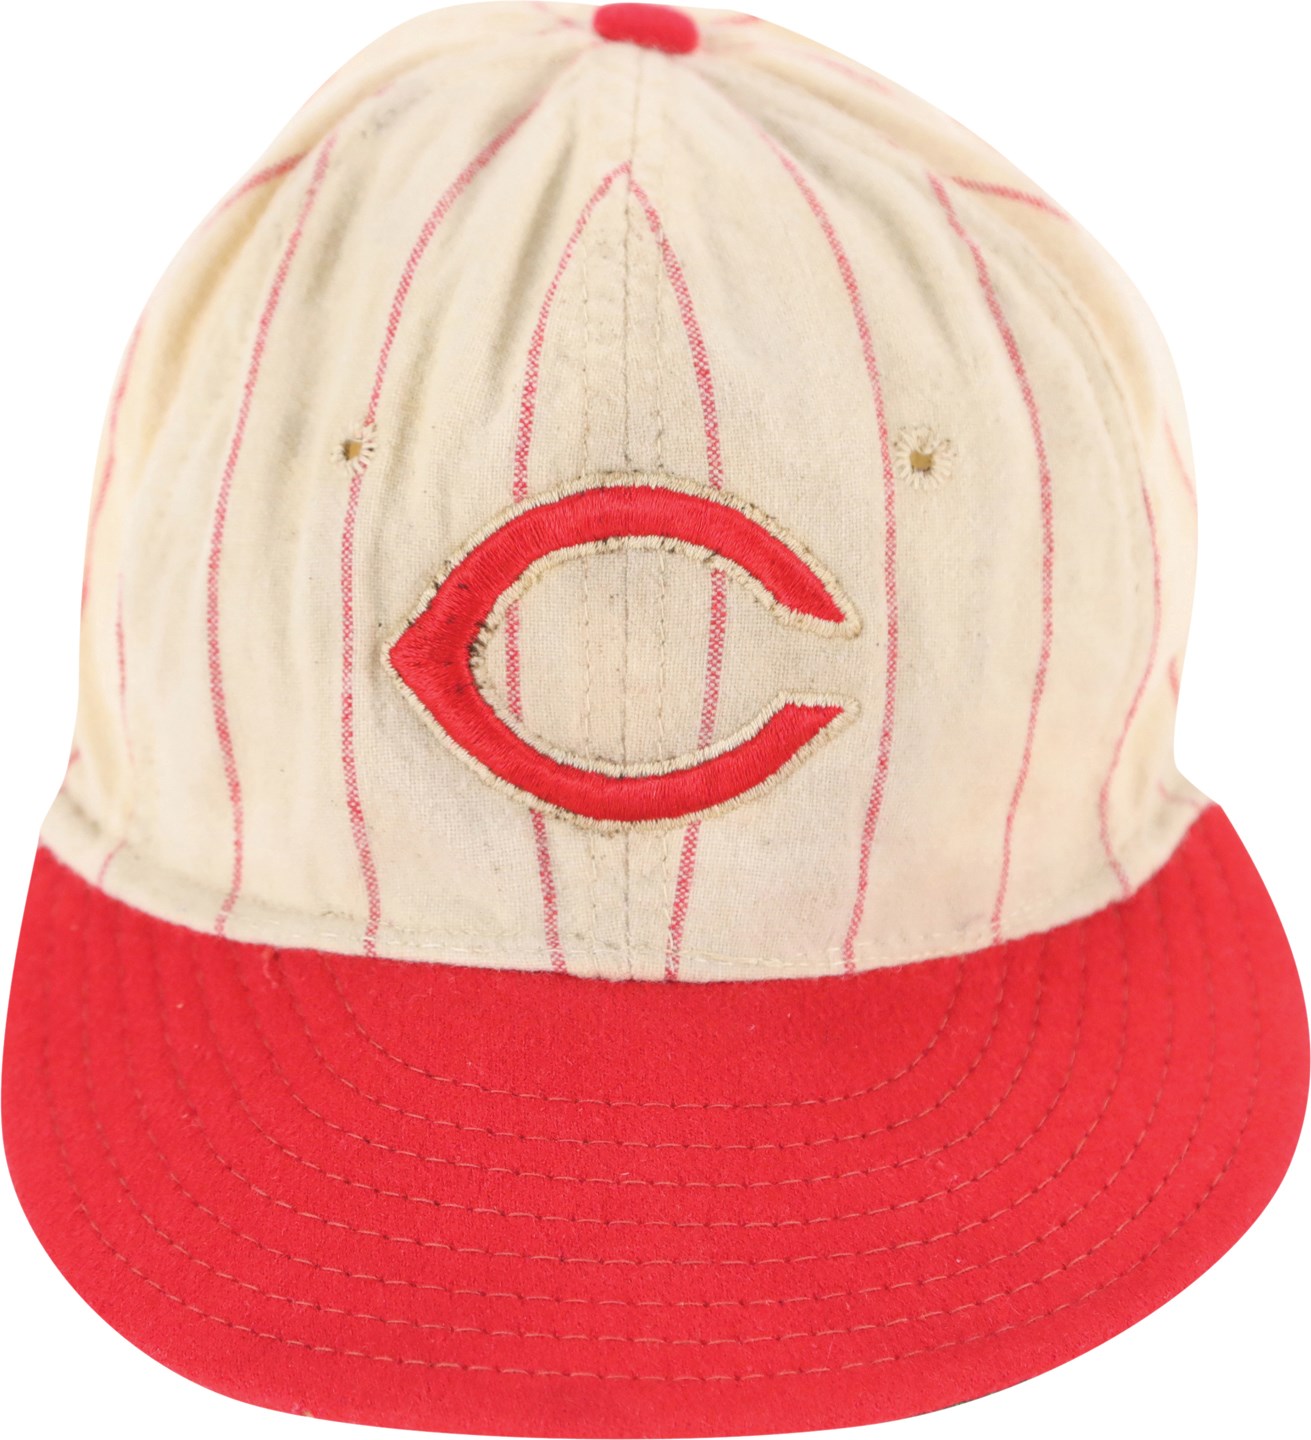 - Circa 1961 Vada Pinson Cincinnati Reds Game Worn Hat